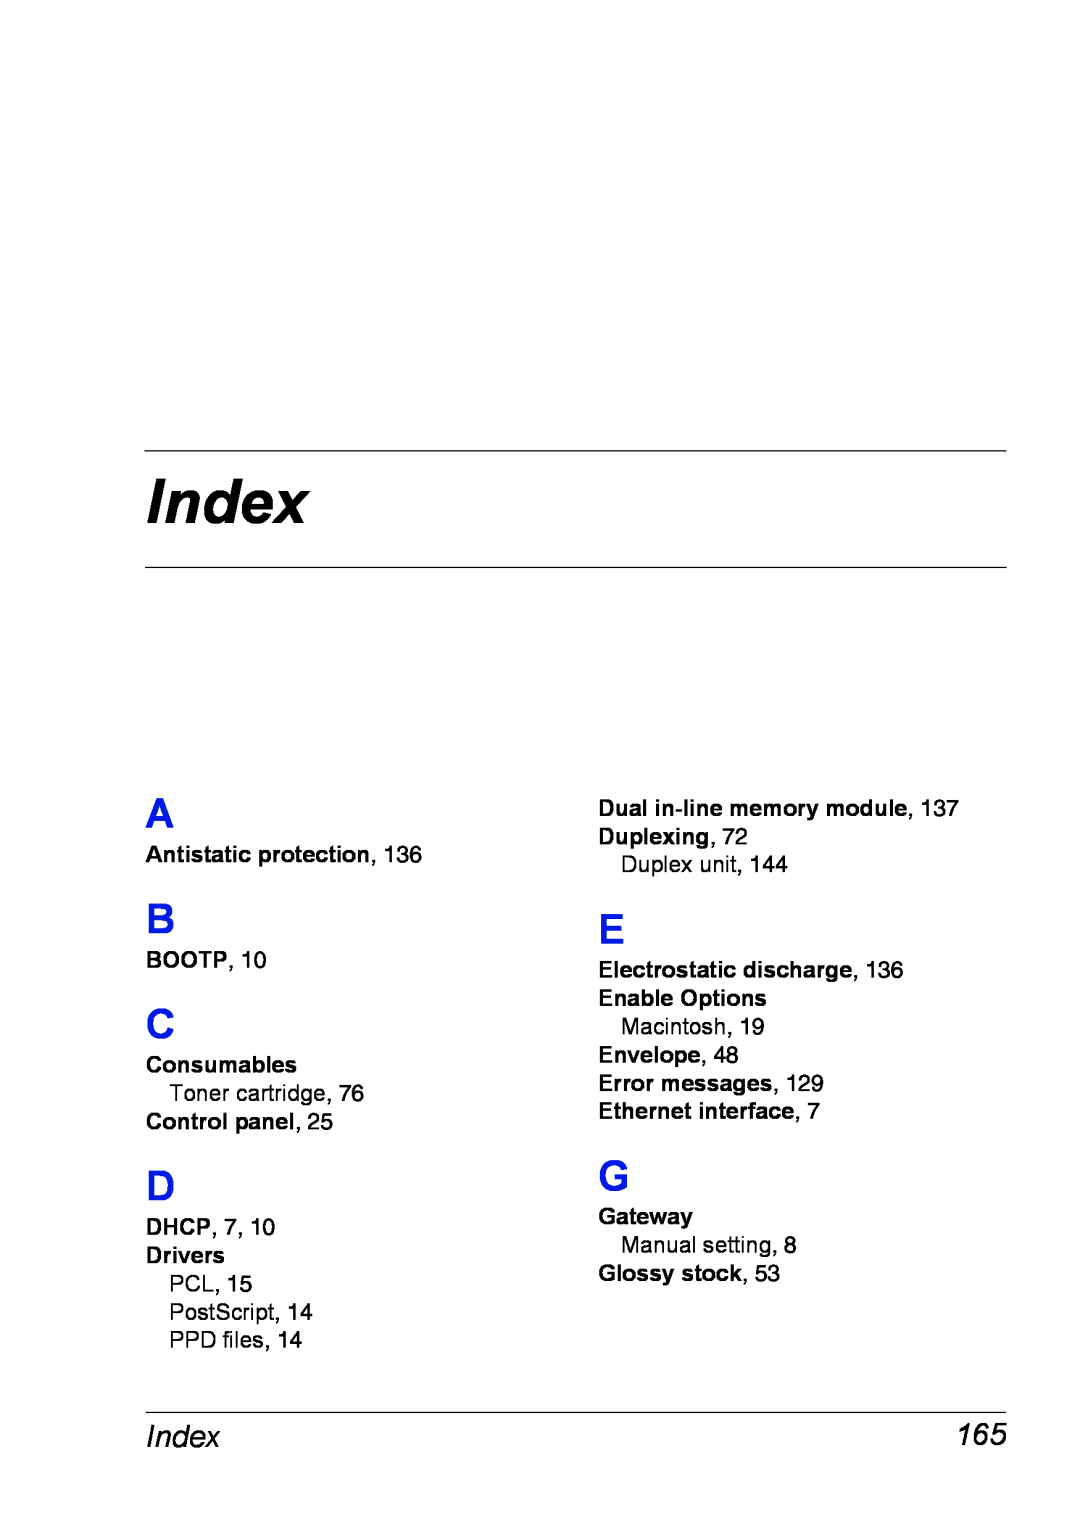 Xerox 6120 manual Index, DHCP, 7 